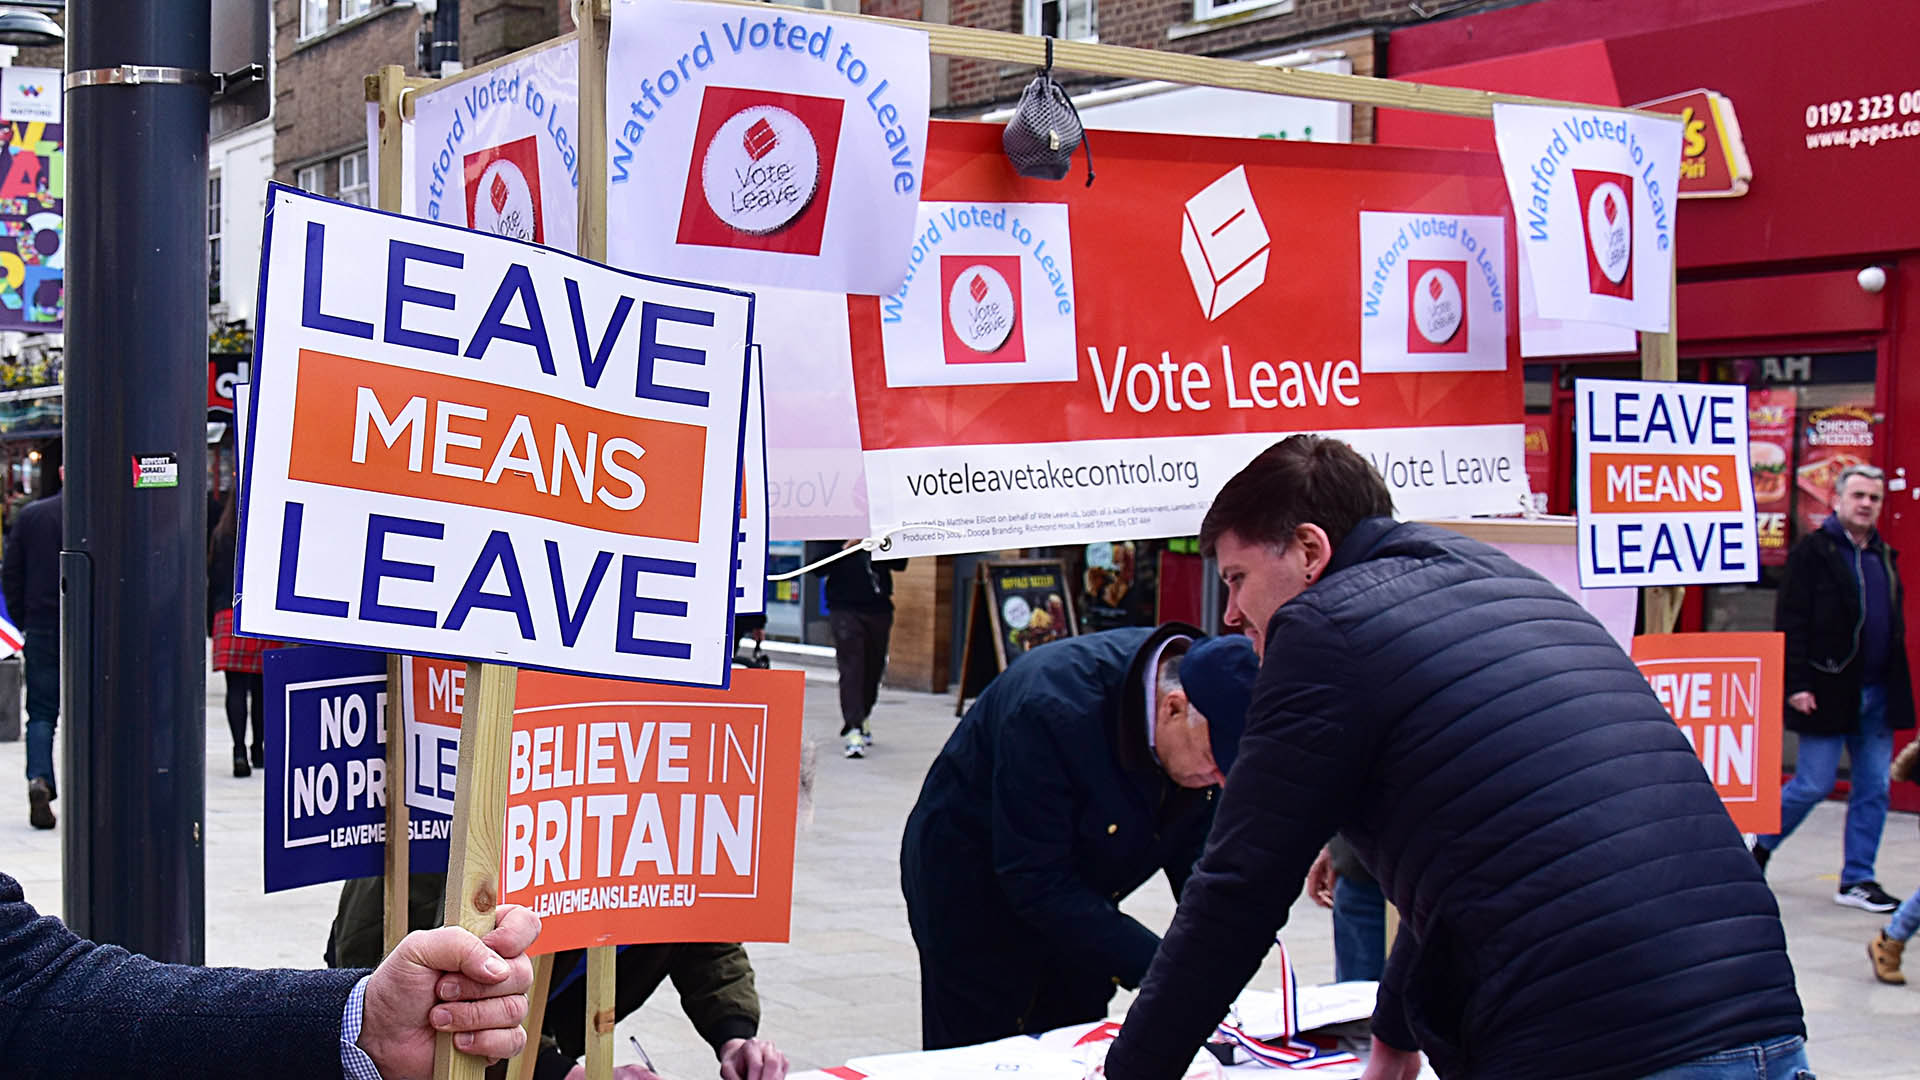 Watford Voted Leaflet Poster Save Brexit Leave Means Leave.